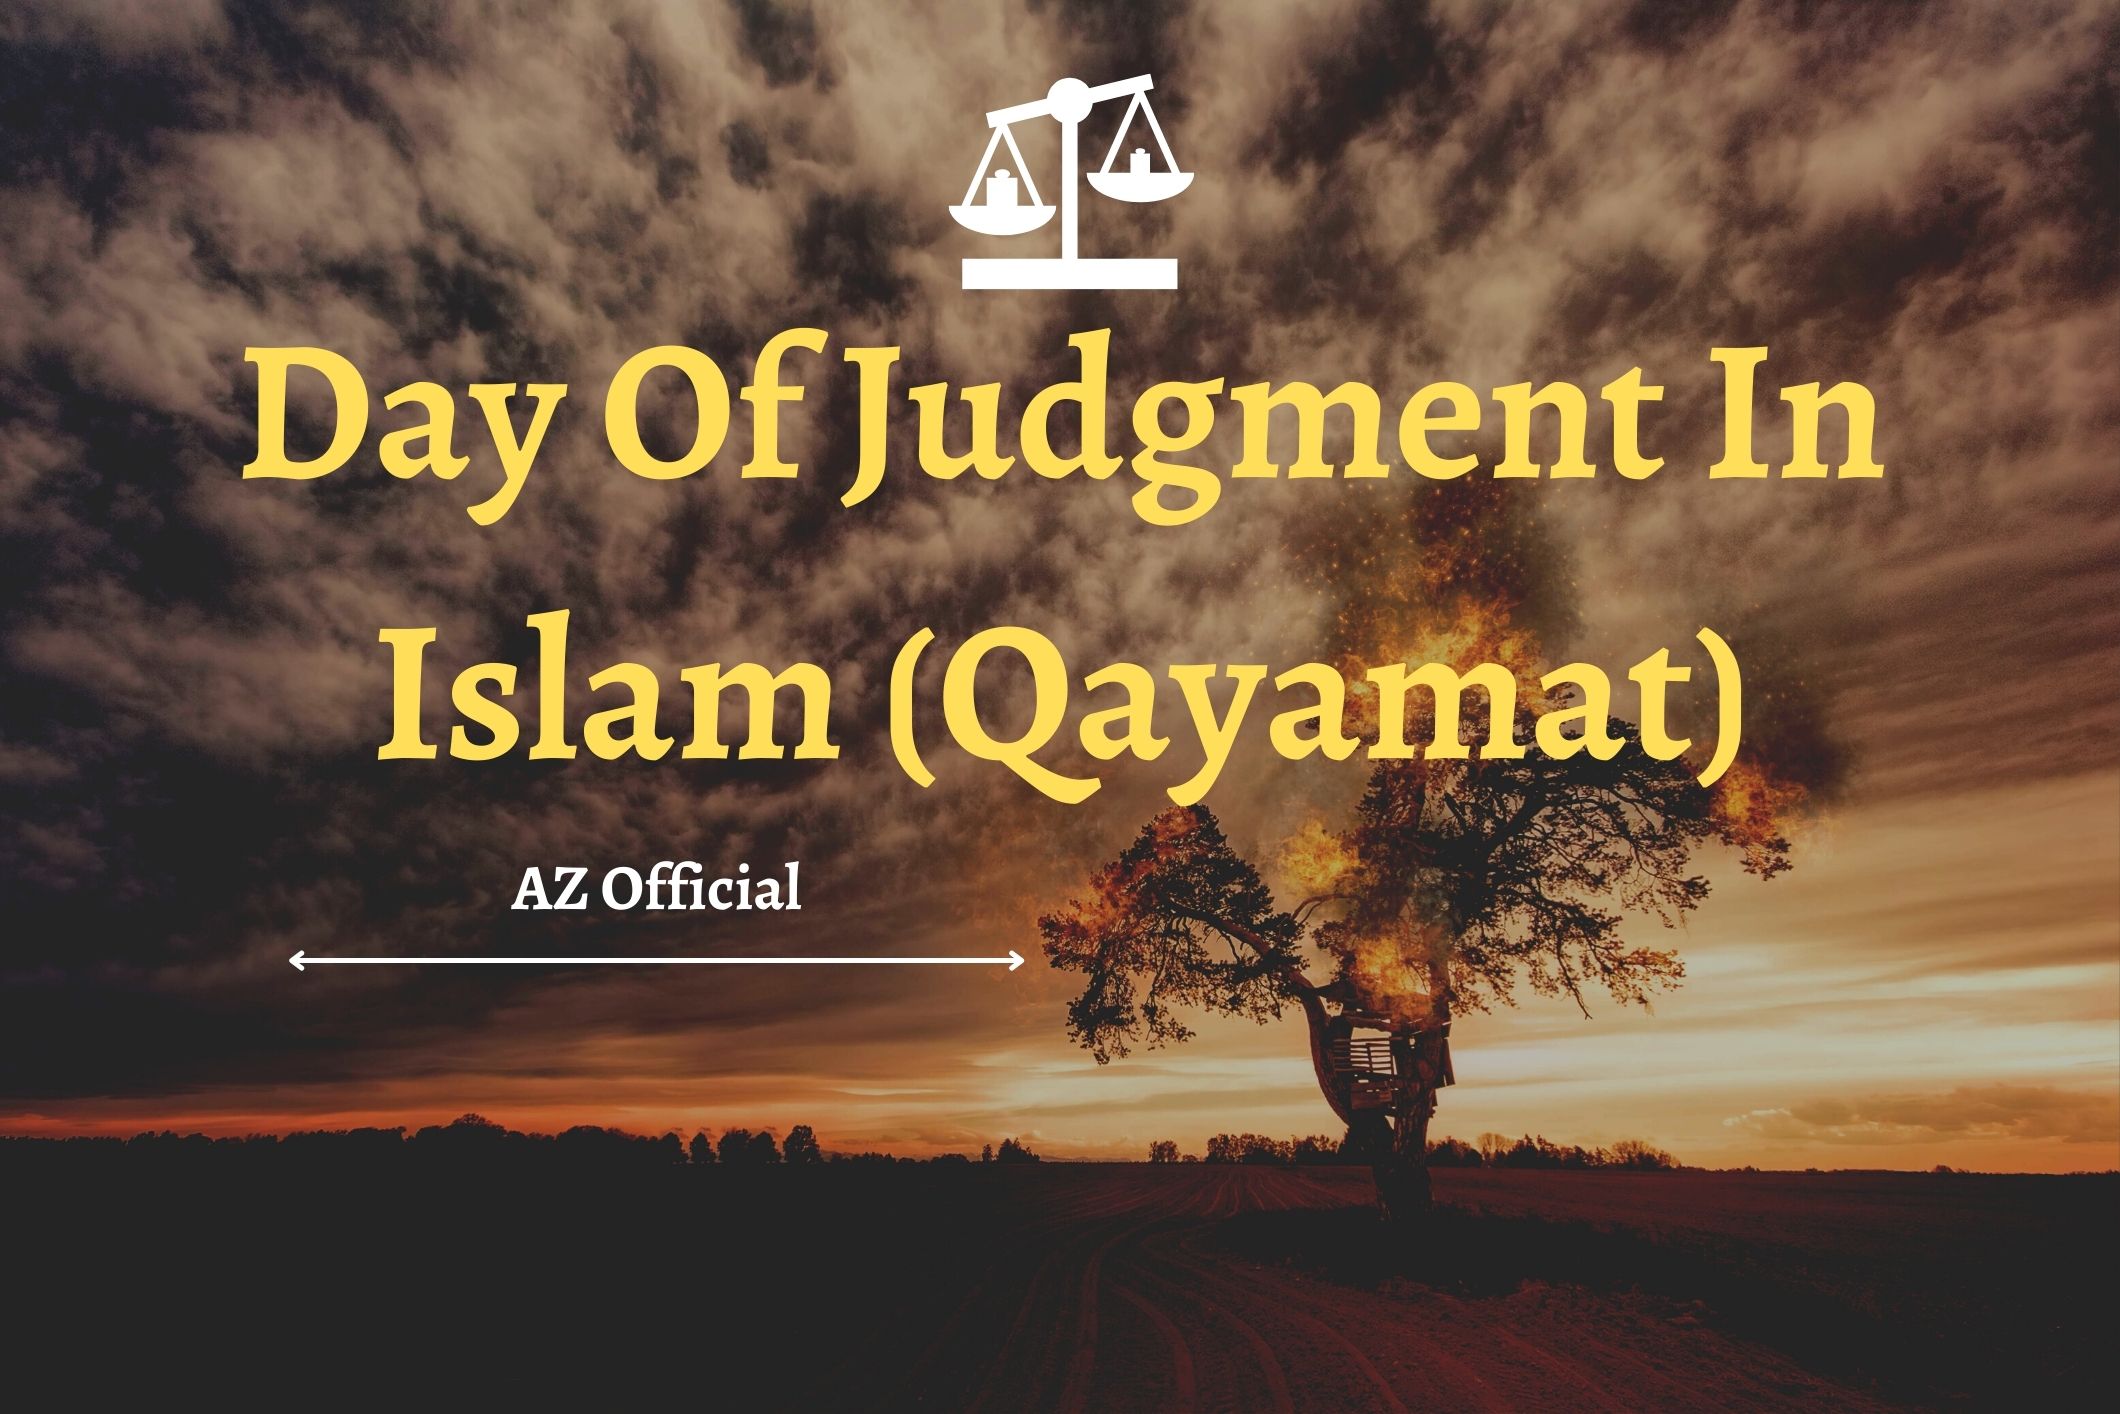 Day Of Judgment In Islam (Qayamat)